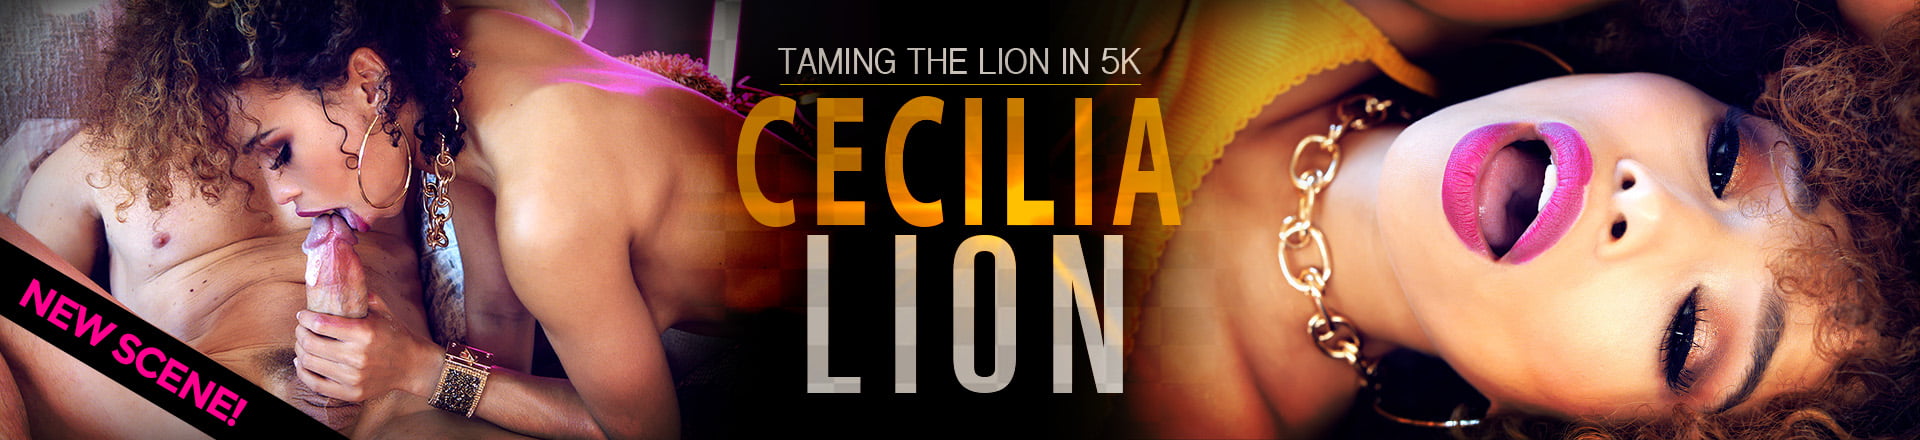 Cecilia Lion in stunning 5K